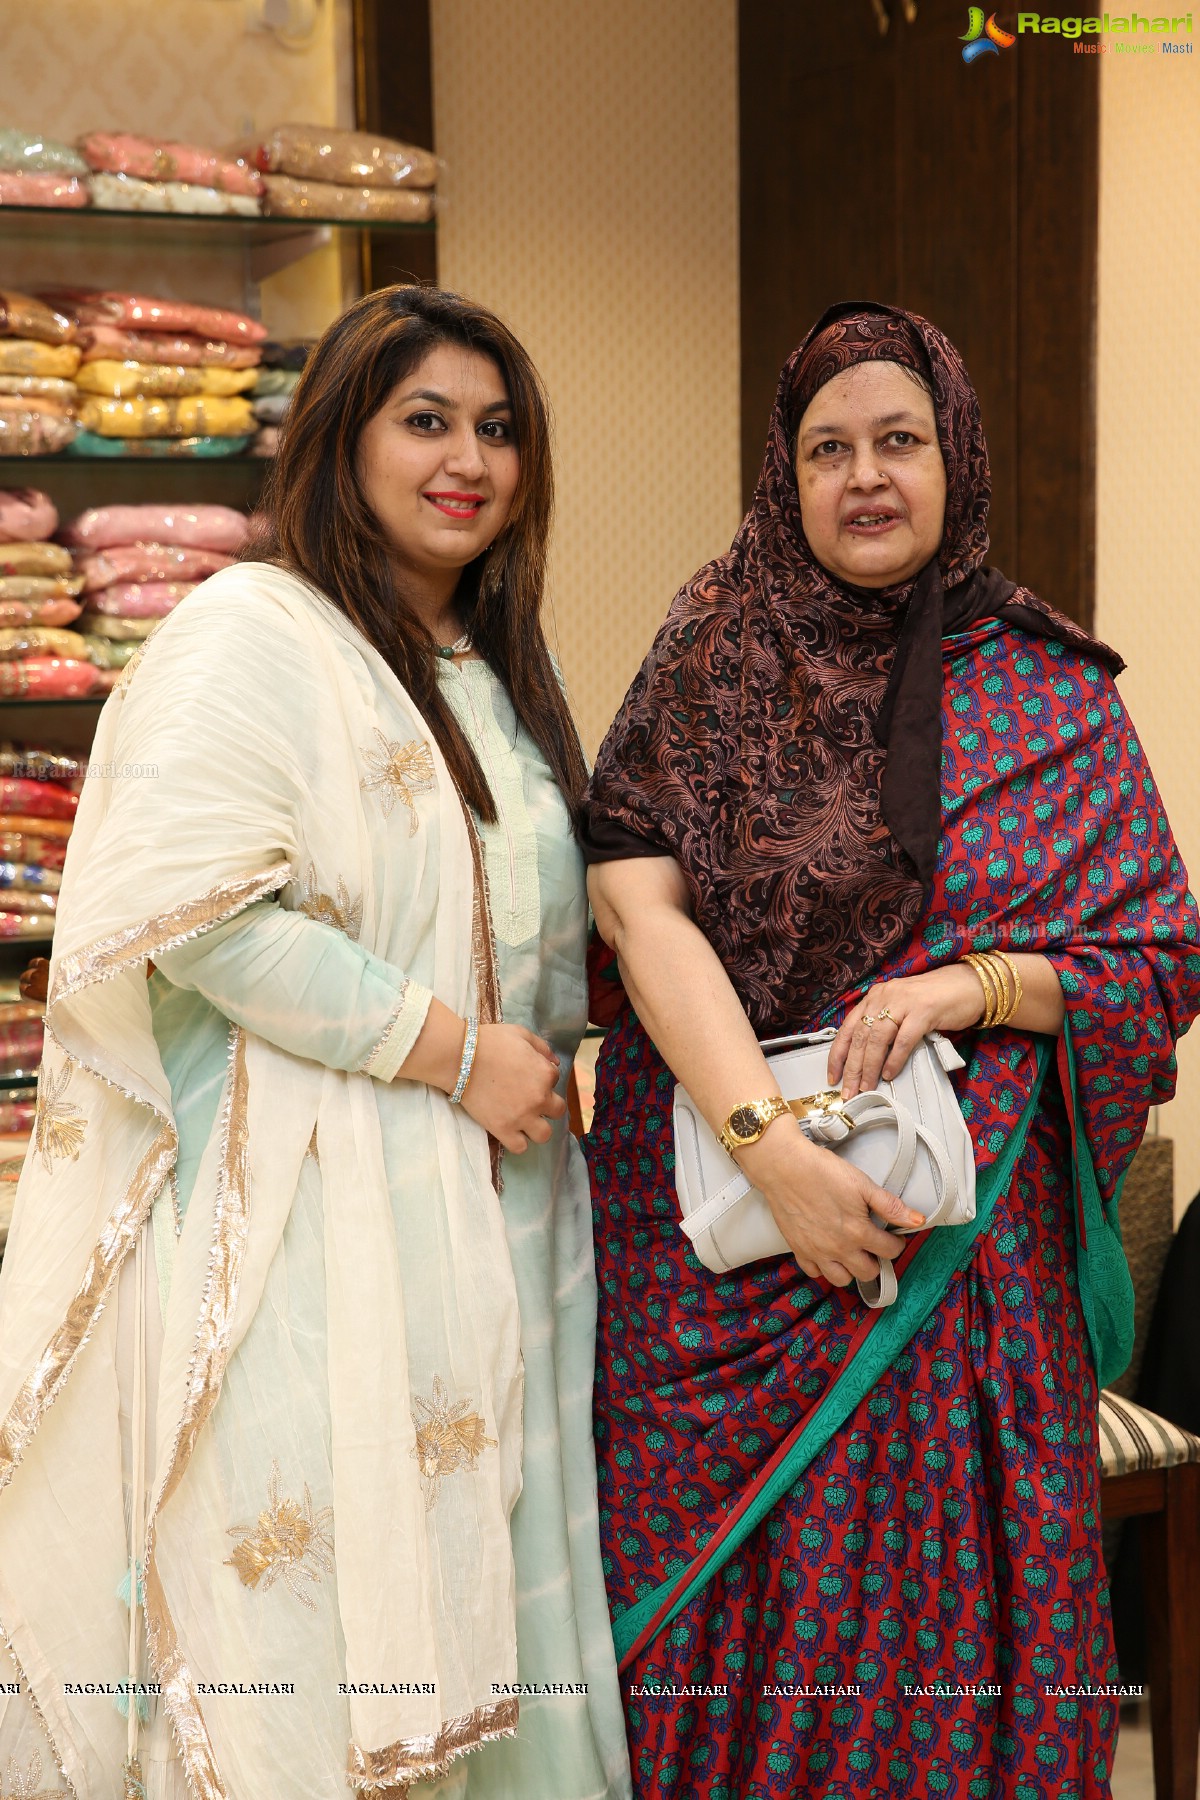 Grand Launch of Myra De Boutique, Banjara Hills, Hyderabad